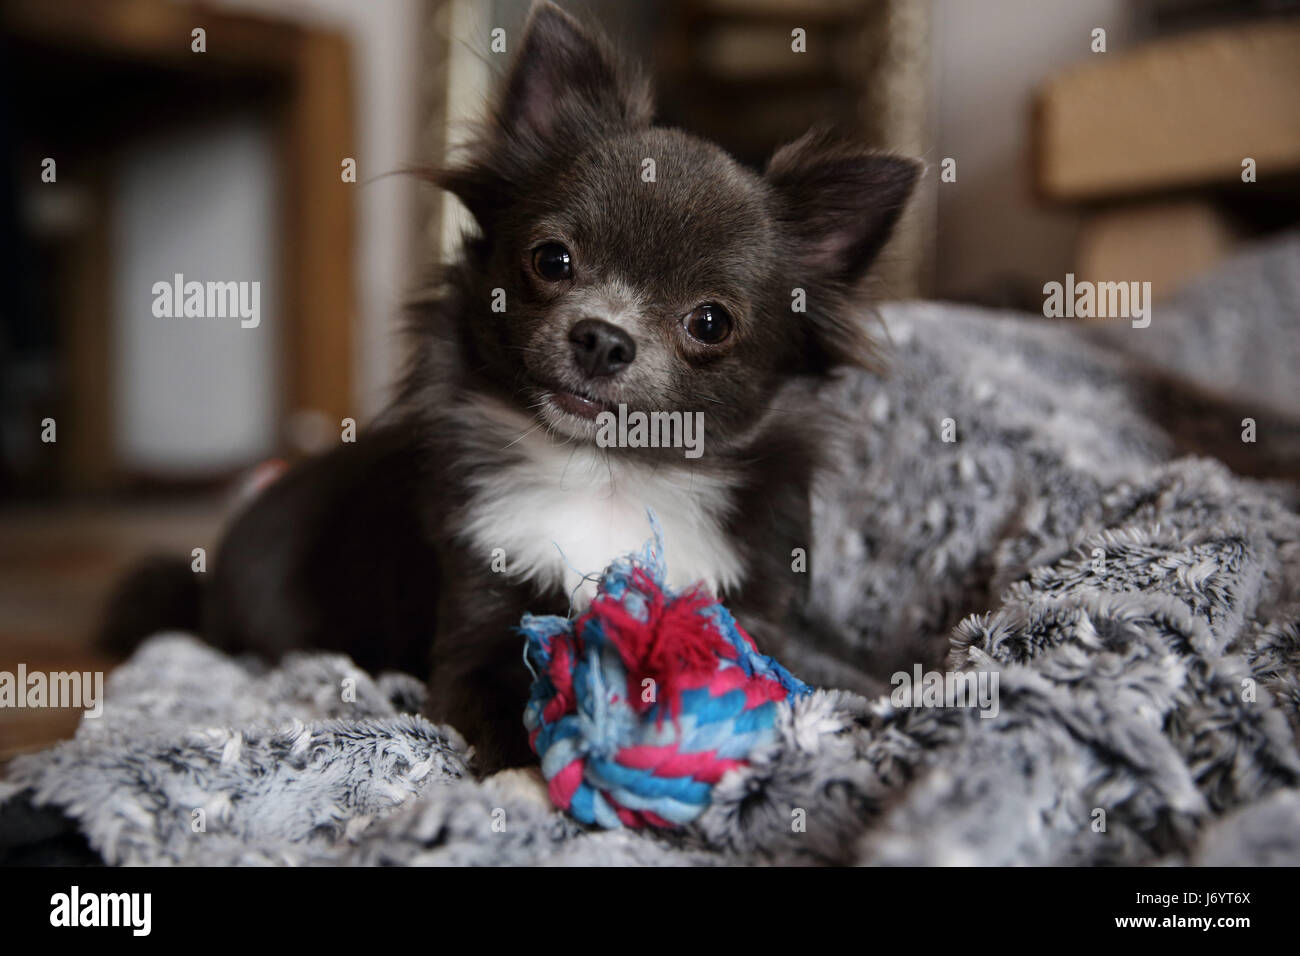 https://c8.alamy.com/comp/J6YT6X/chihuahua-dog-with-soft-toy-J6YT6X.jpg